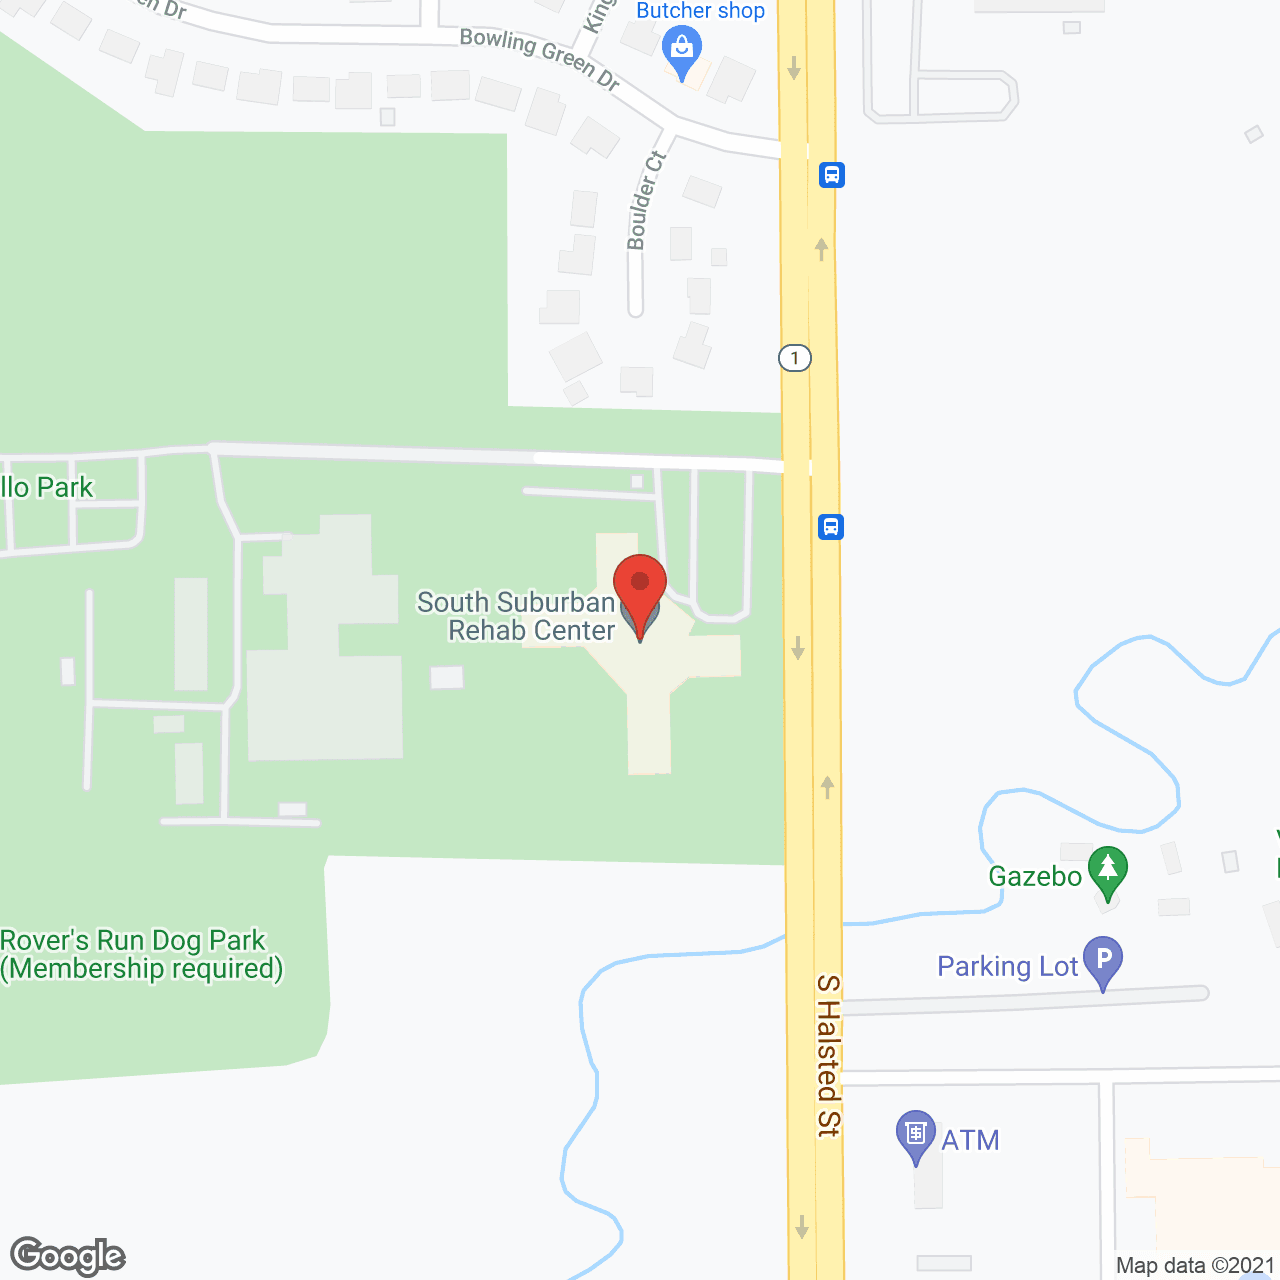 South Suburban Rehabilitation Center in google map